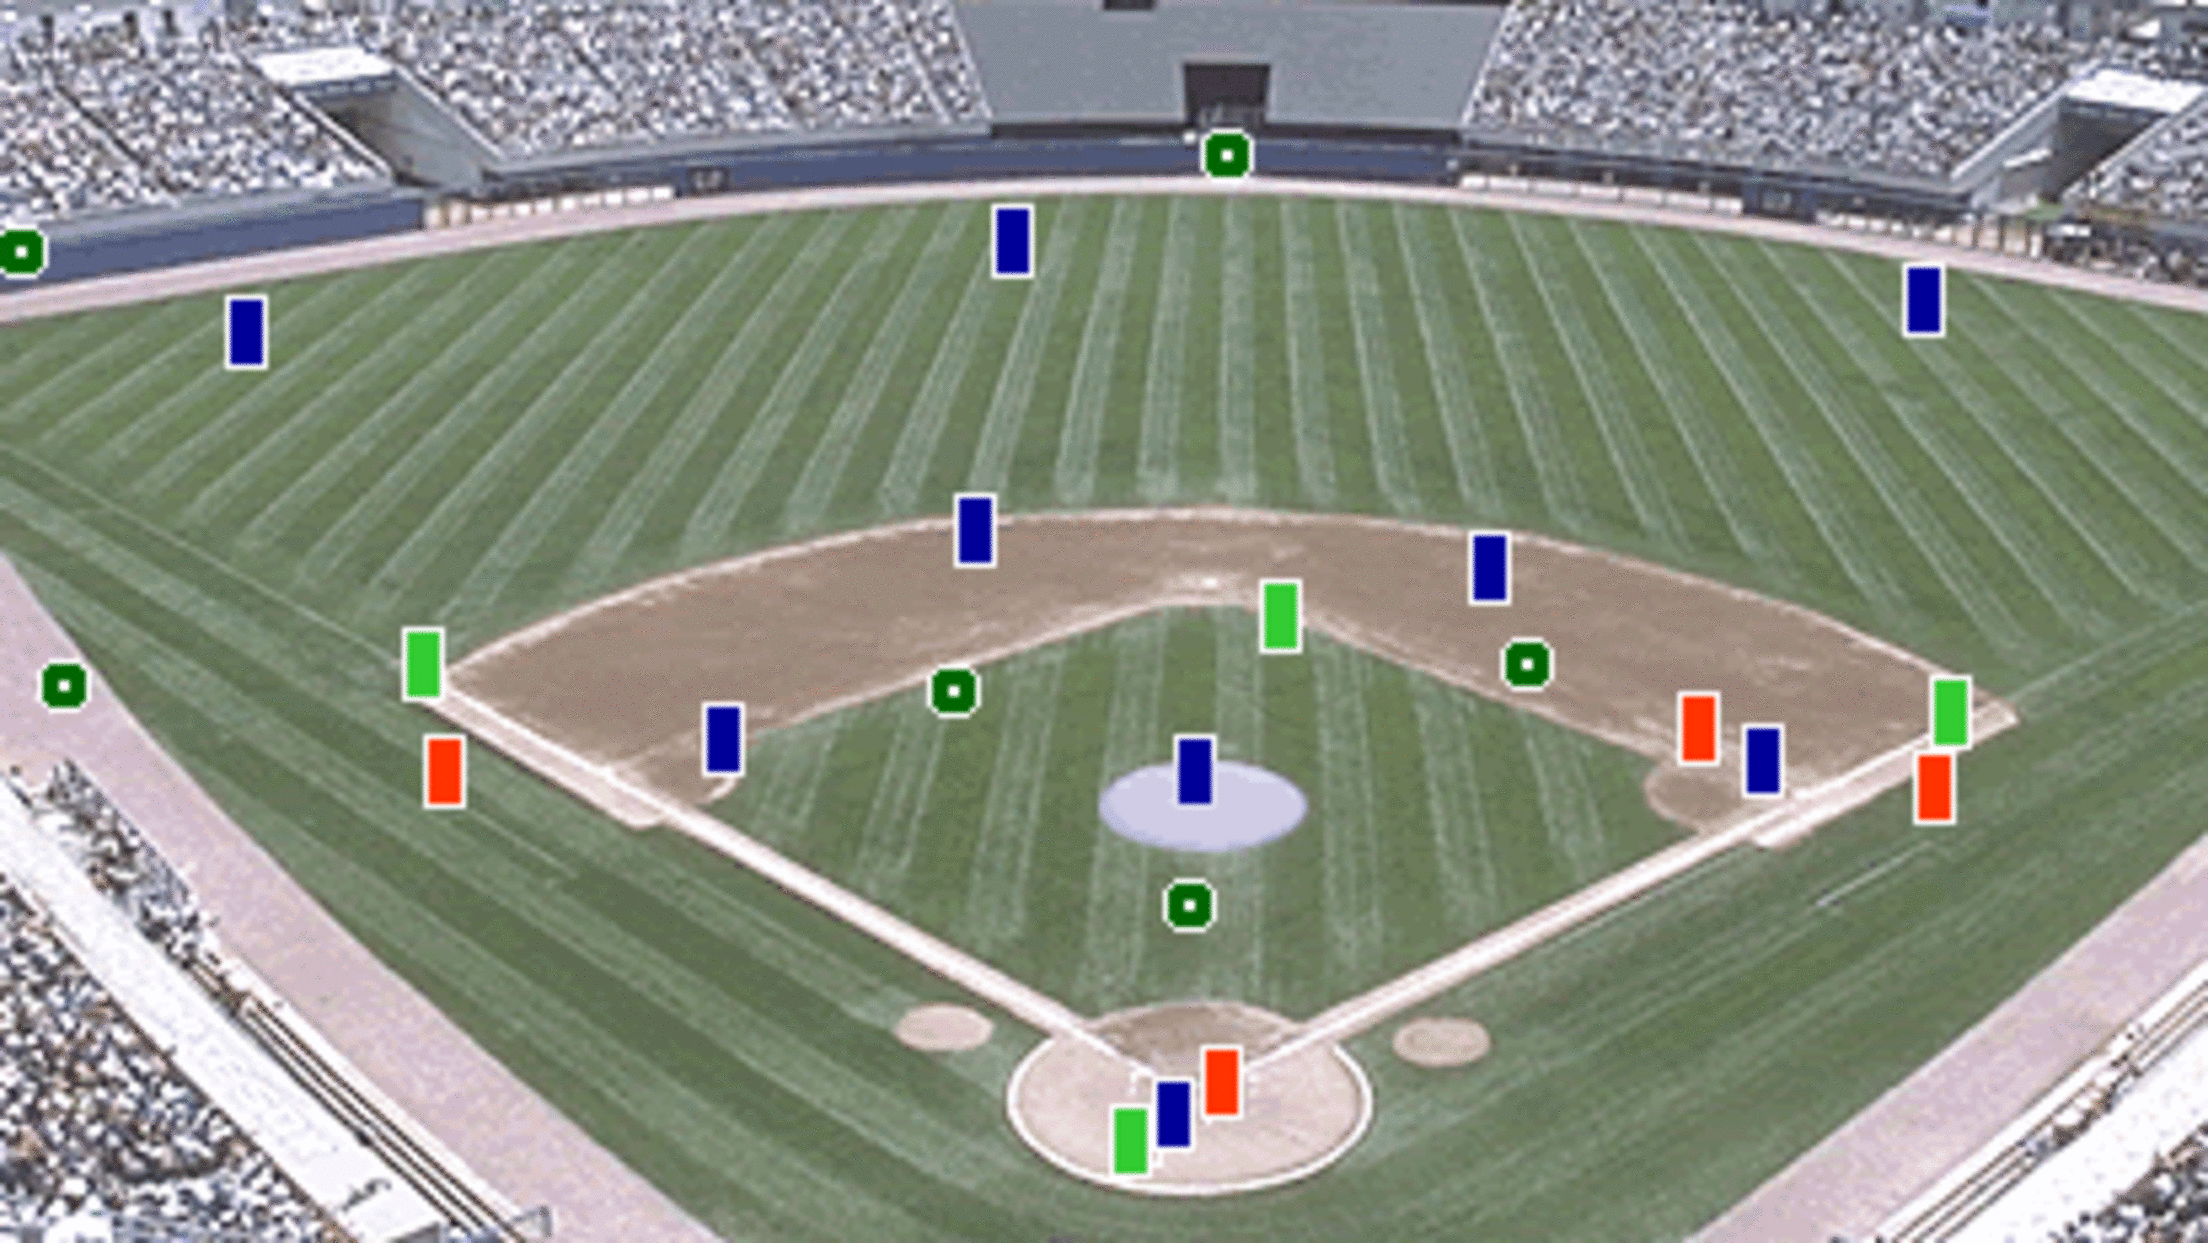 CHART: Major League Baseball Ballpark Fair Territory Sizes